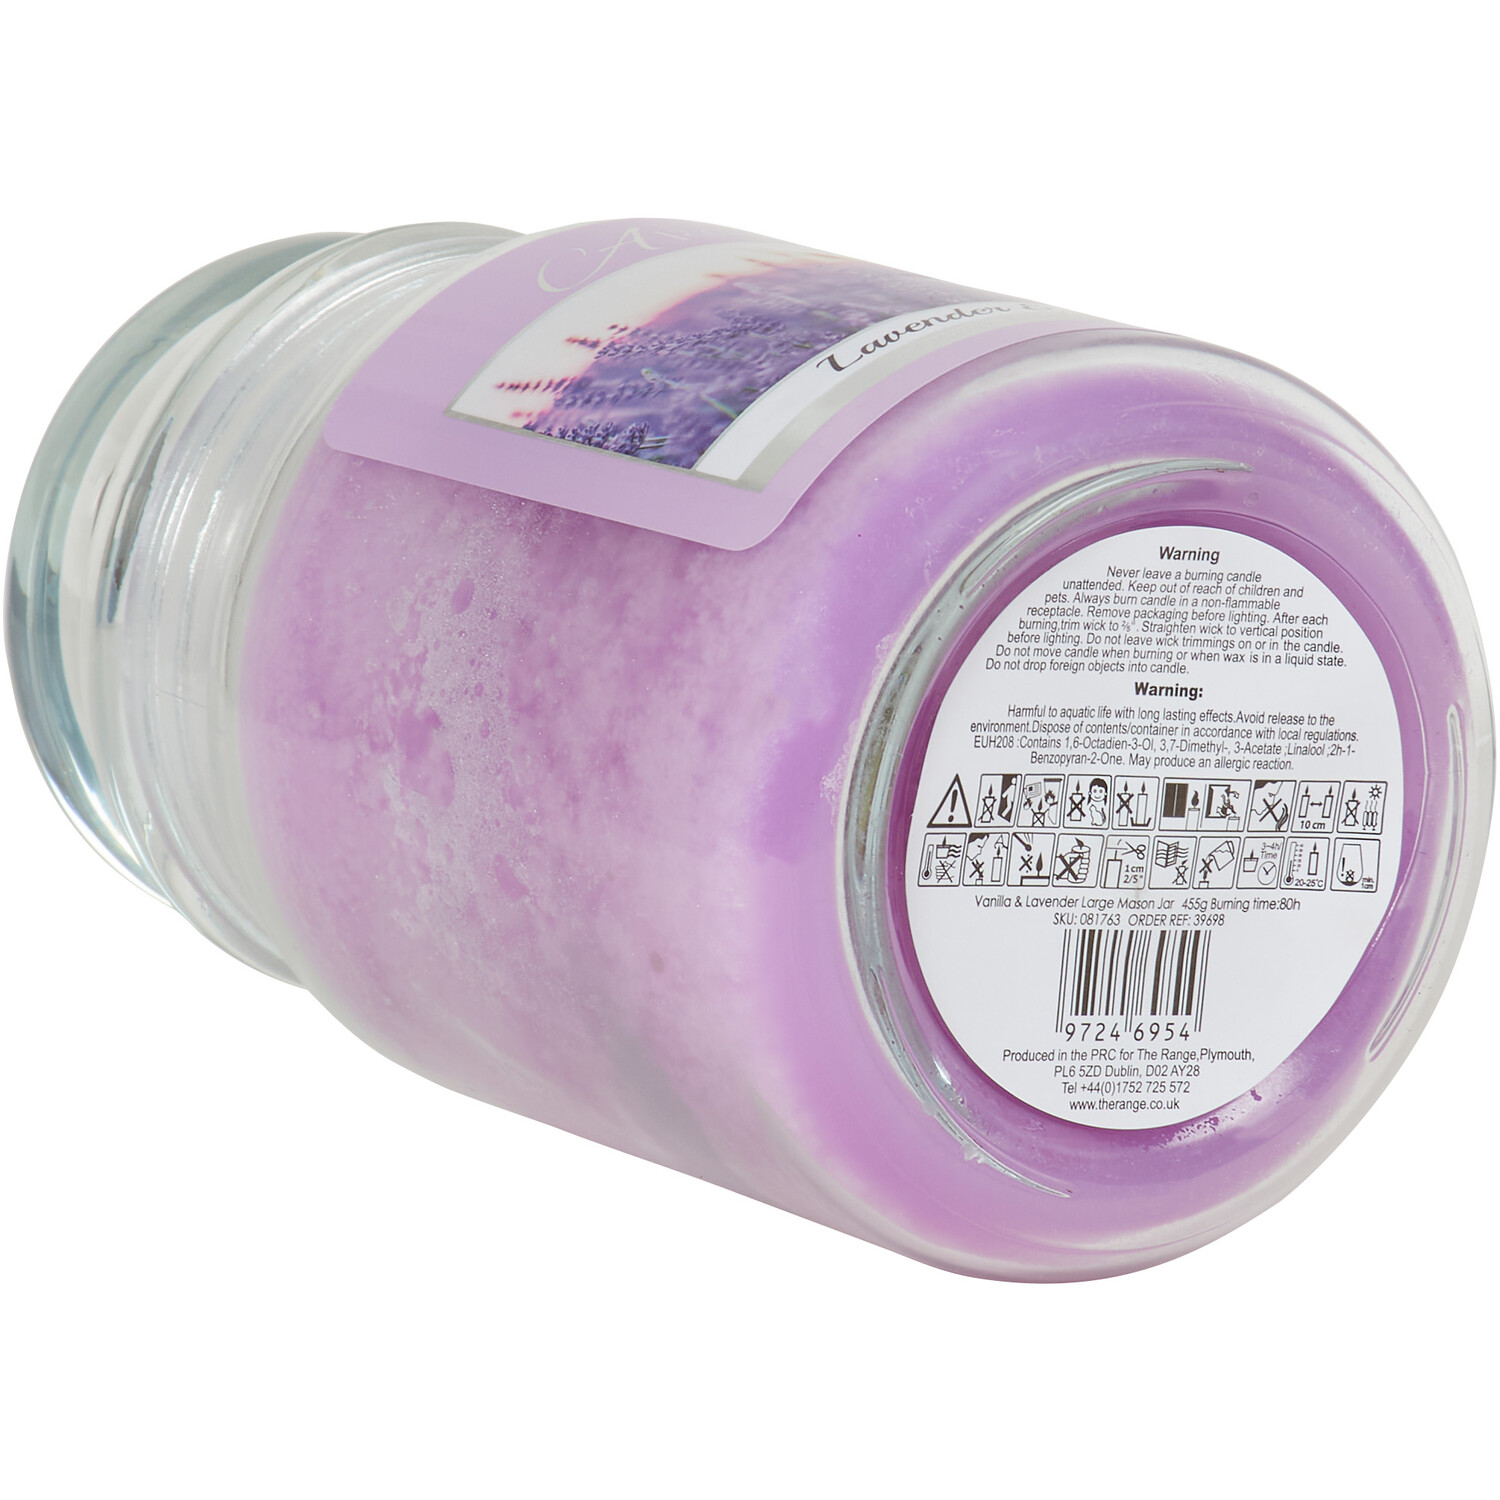 Lavender & Vanilla Large Mason Jar Candle - Purple Image 4